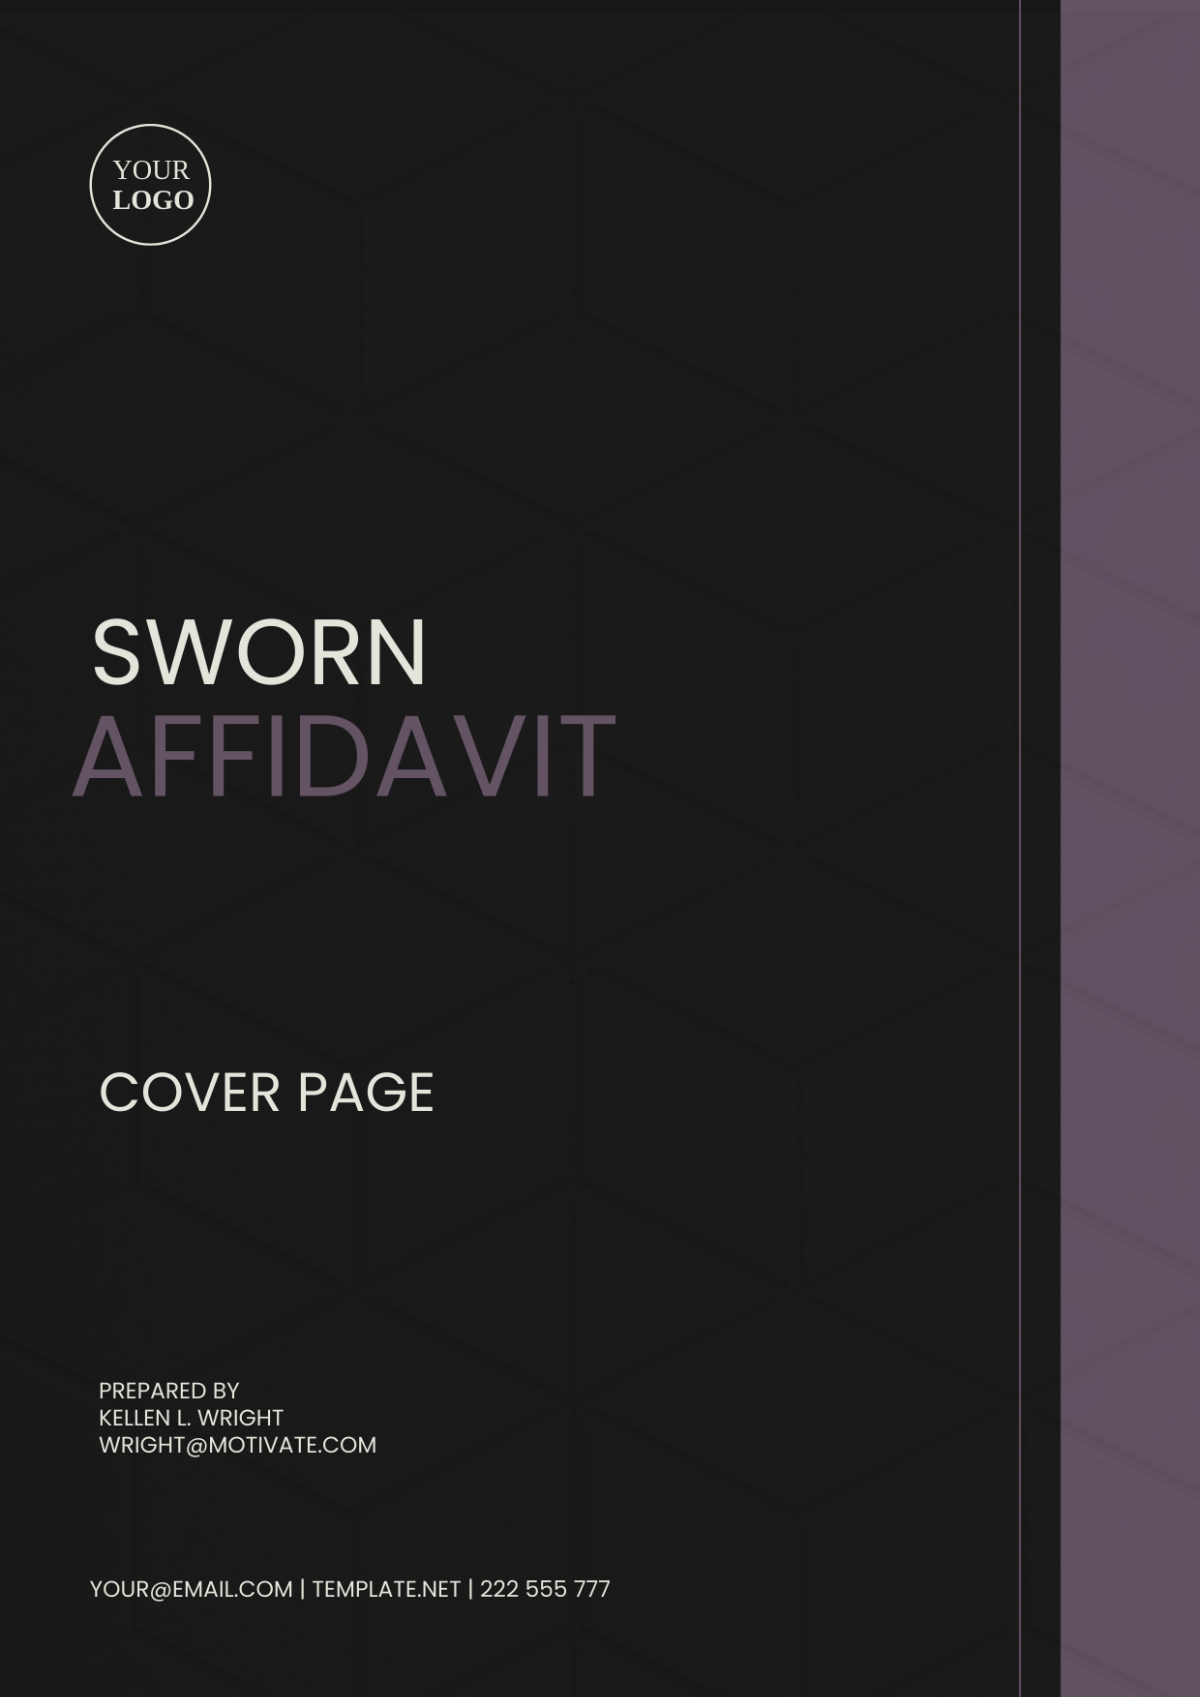 Sworn Affidavit Cover Page